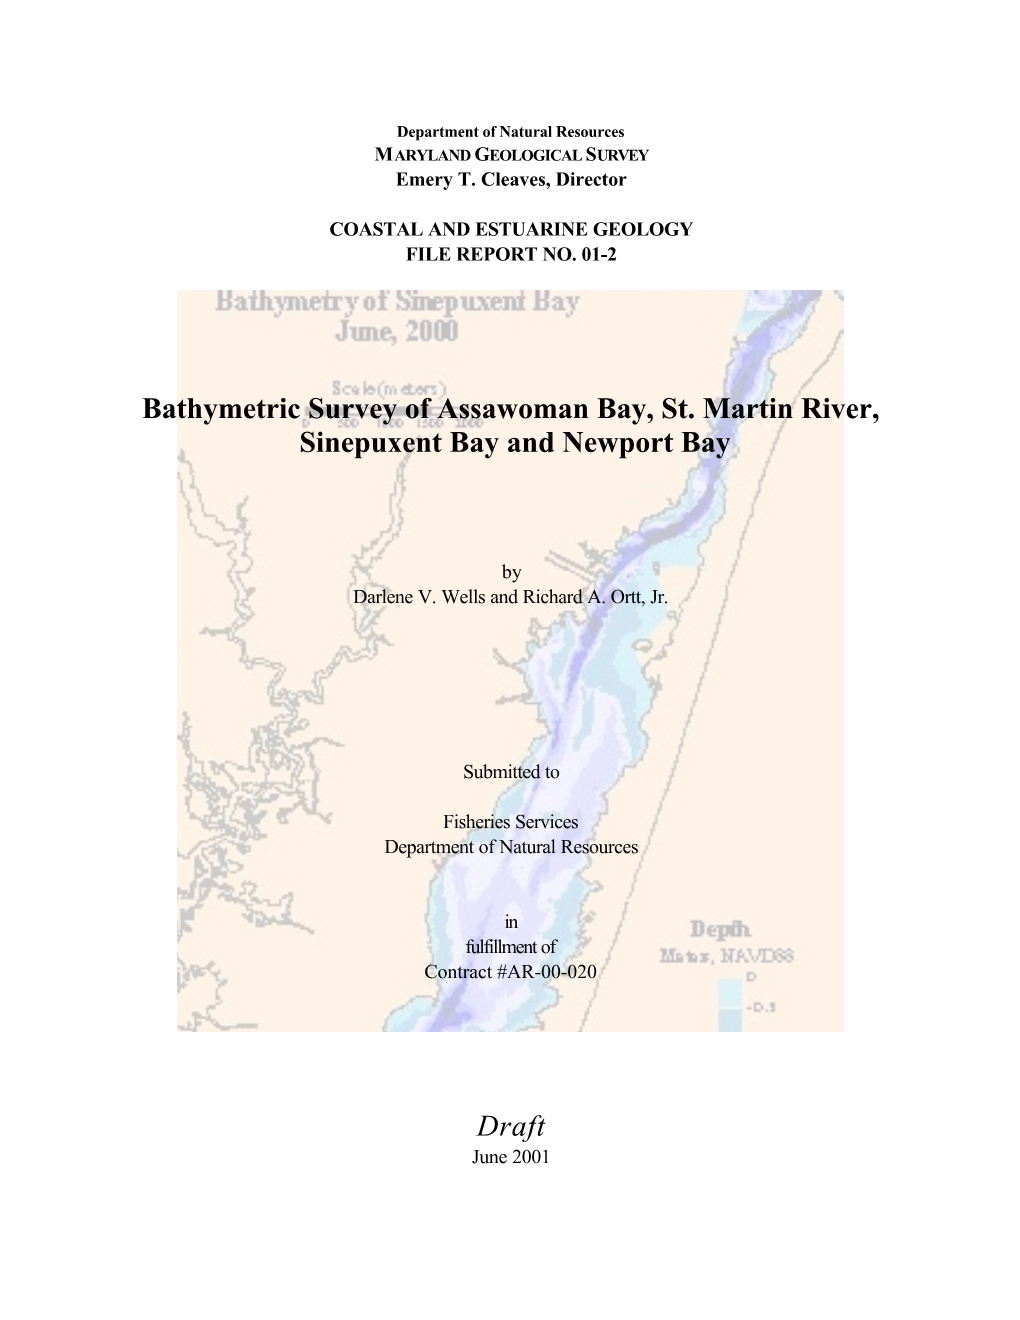 Bathymetric Survey of Assawoman Bay, St. Martin River, Sinepuxent Bay and Newport Bay